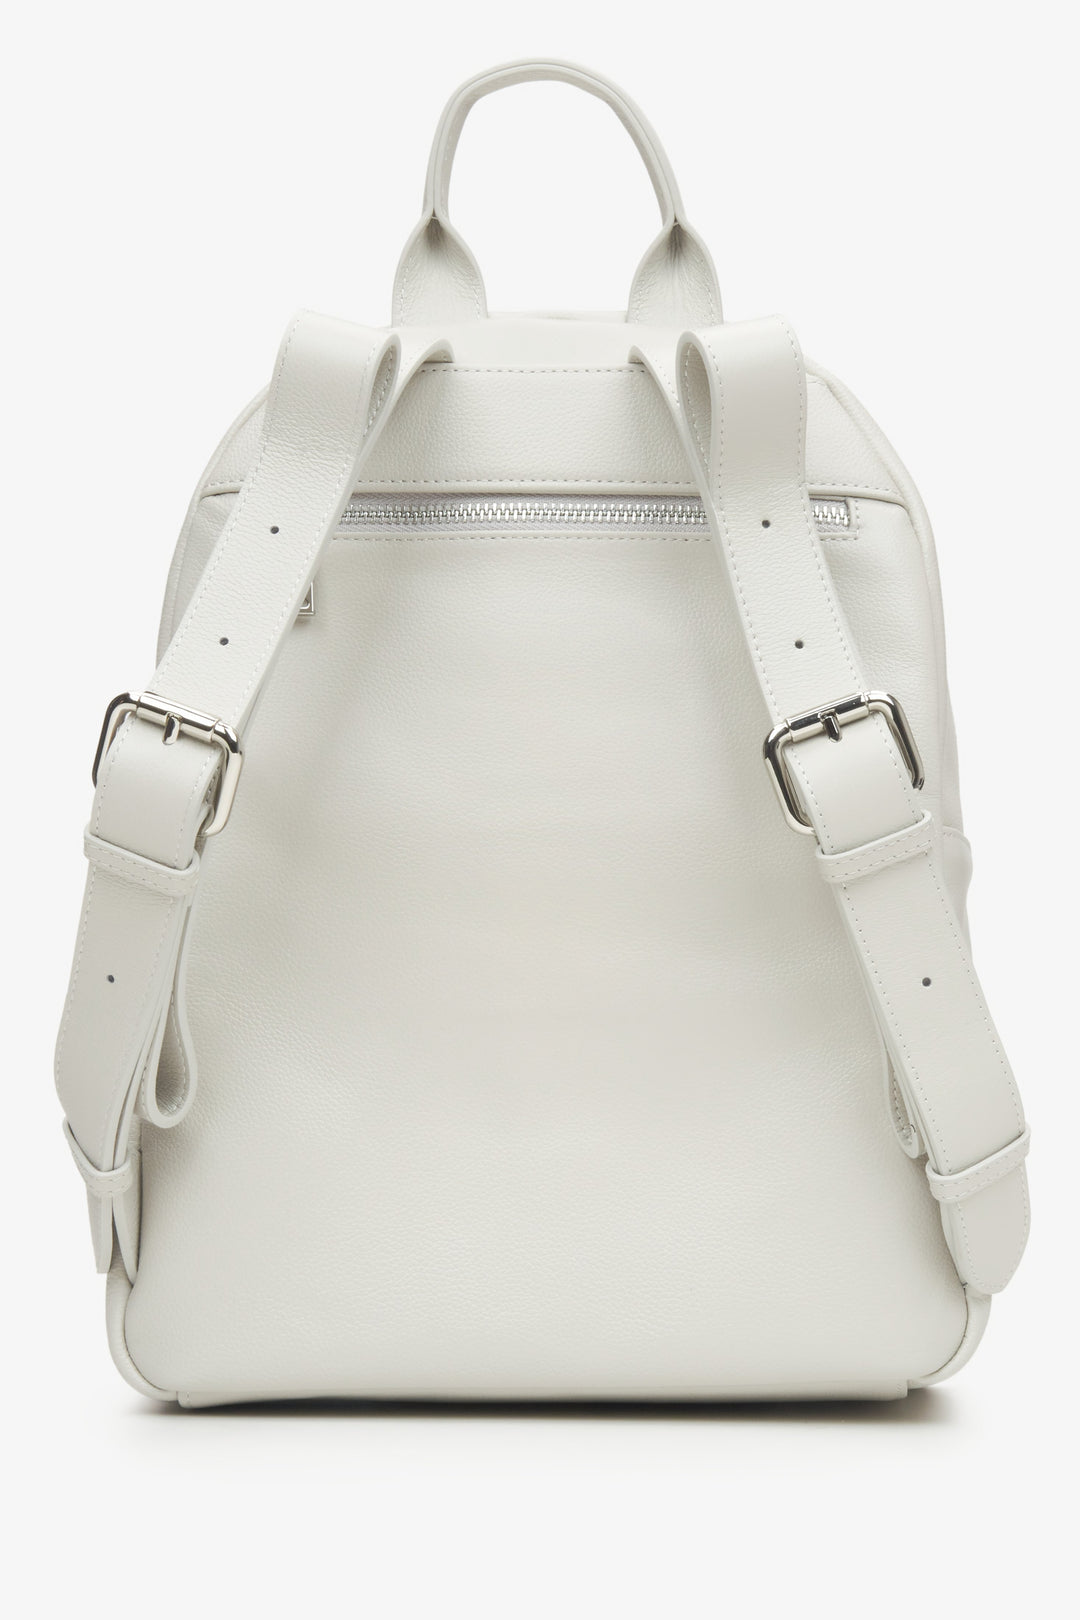 Women's light grey leather backpack by Estro - reverse side.